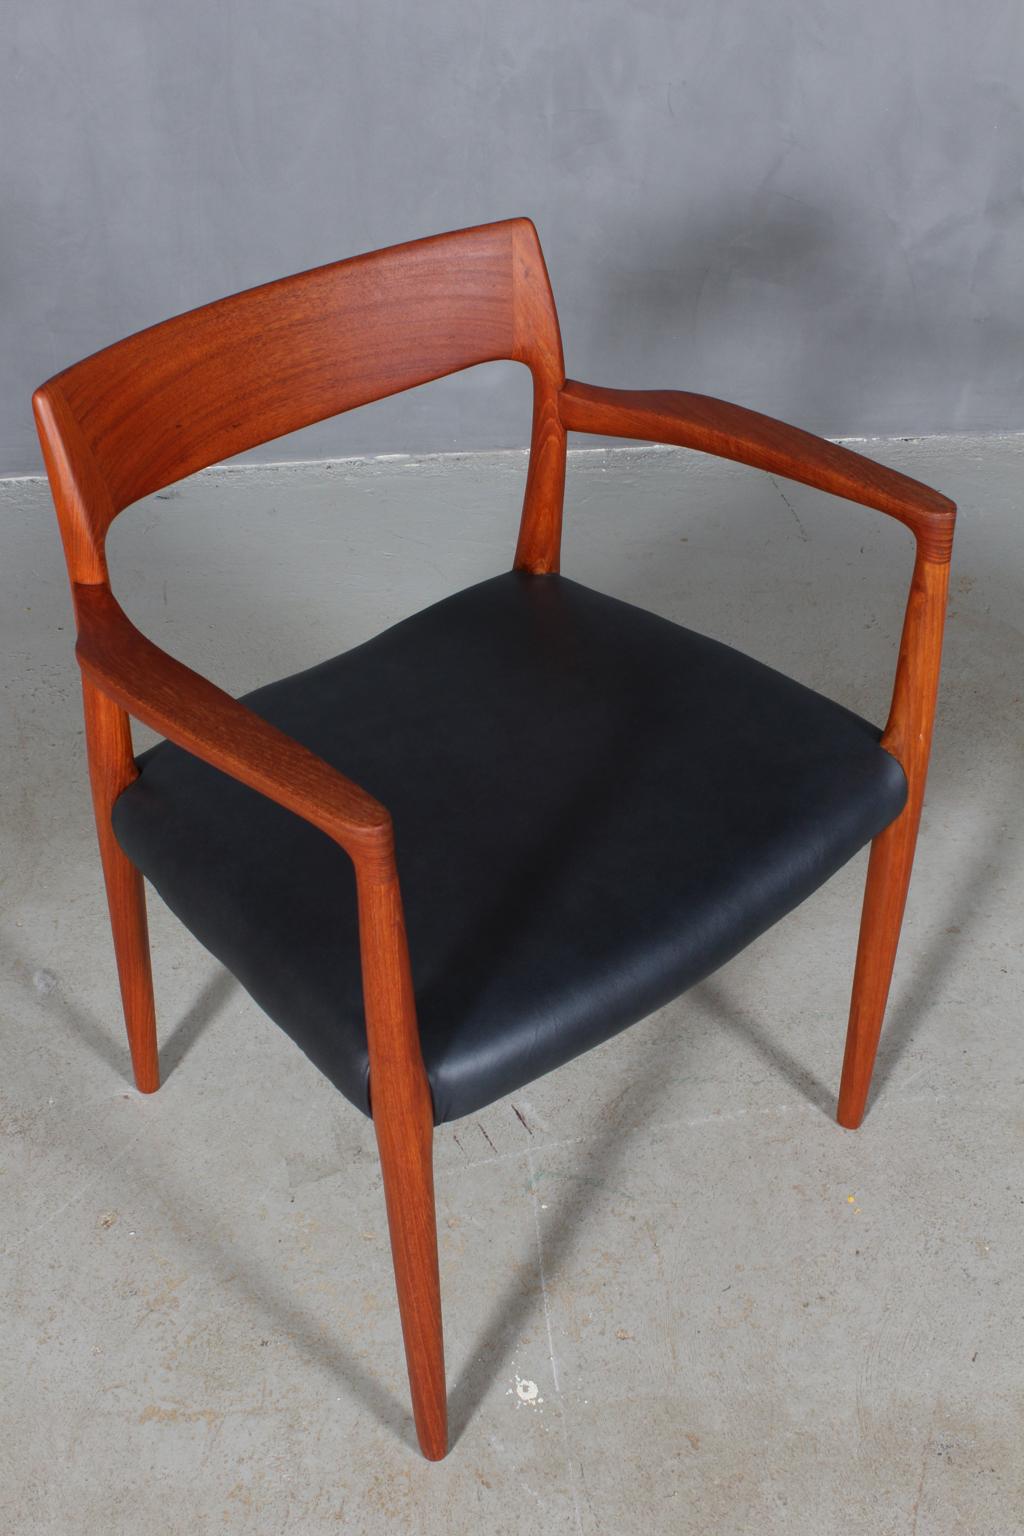 N. O. Møller armchair with frame of solid teak.

Seats new upholstered with black aniline leather

Model 77, Made by J. L. Møller, Denmark, 1960s.